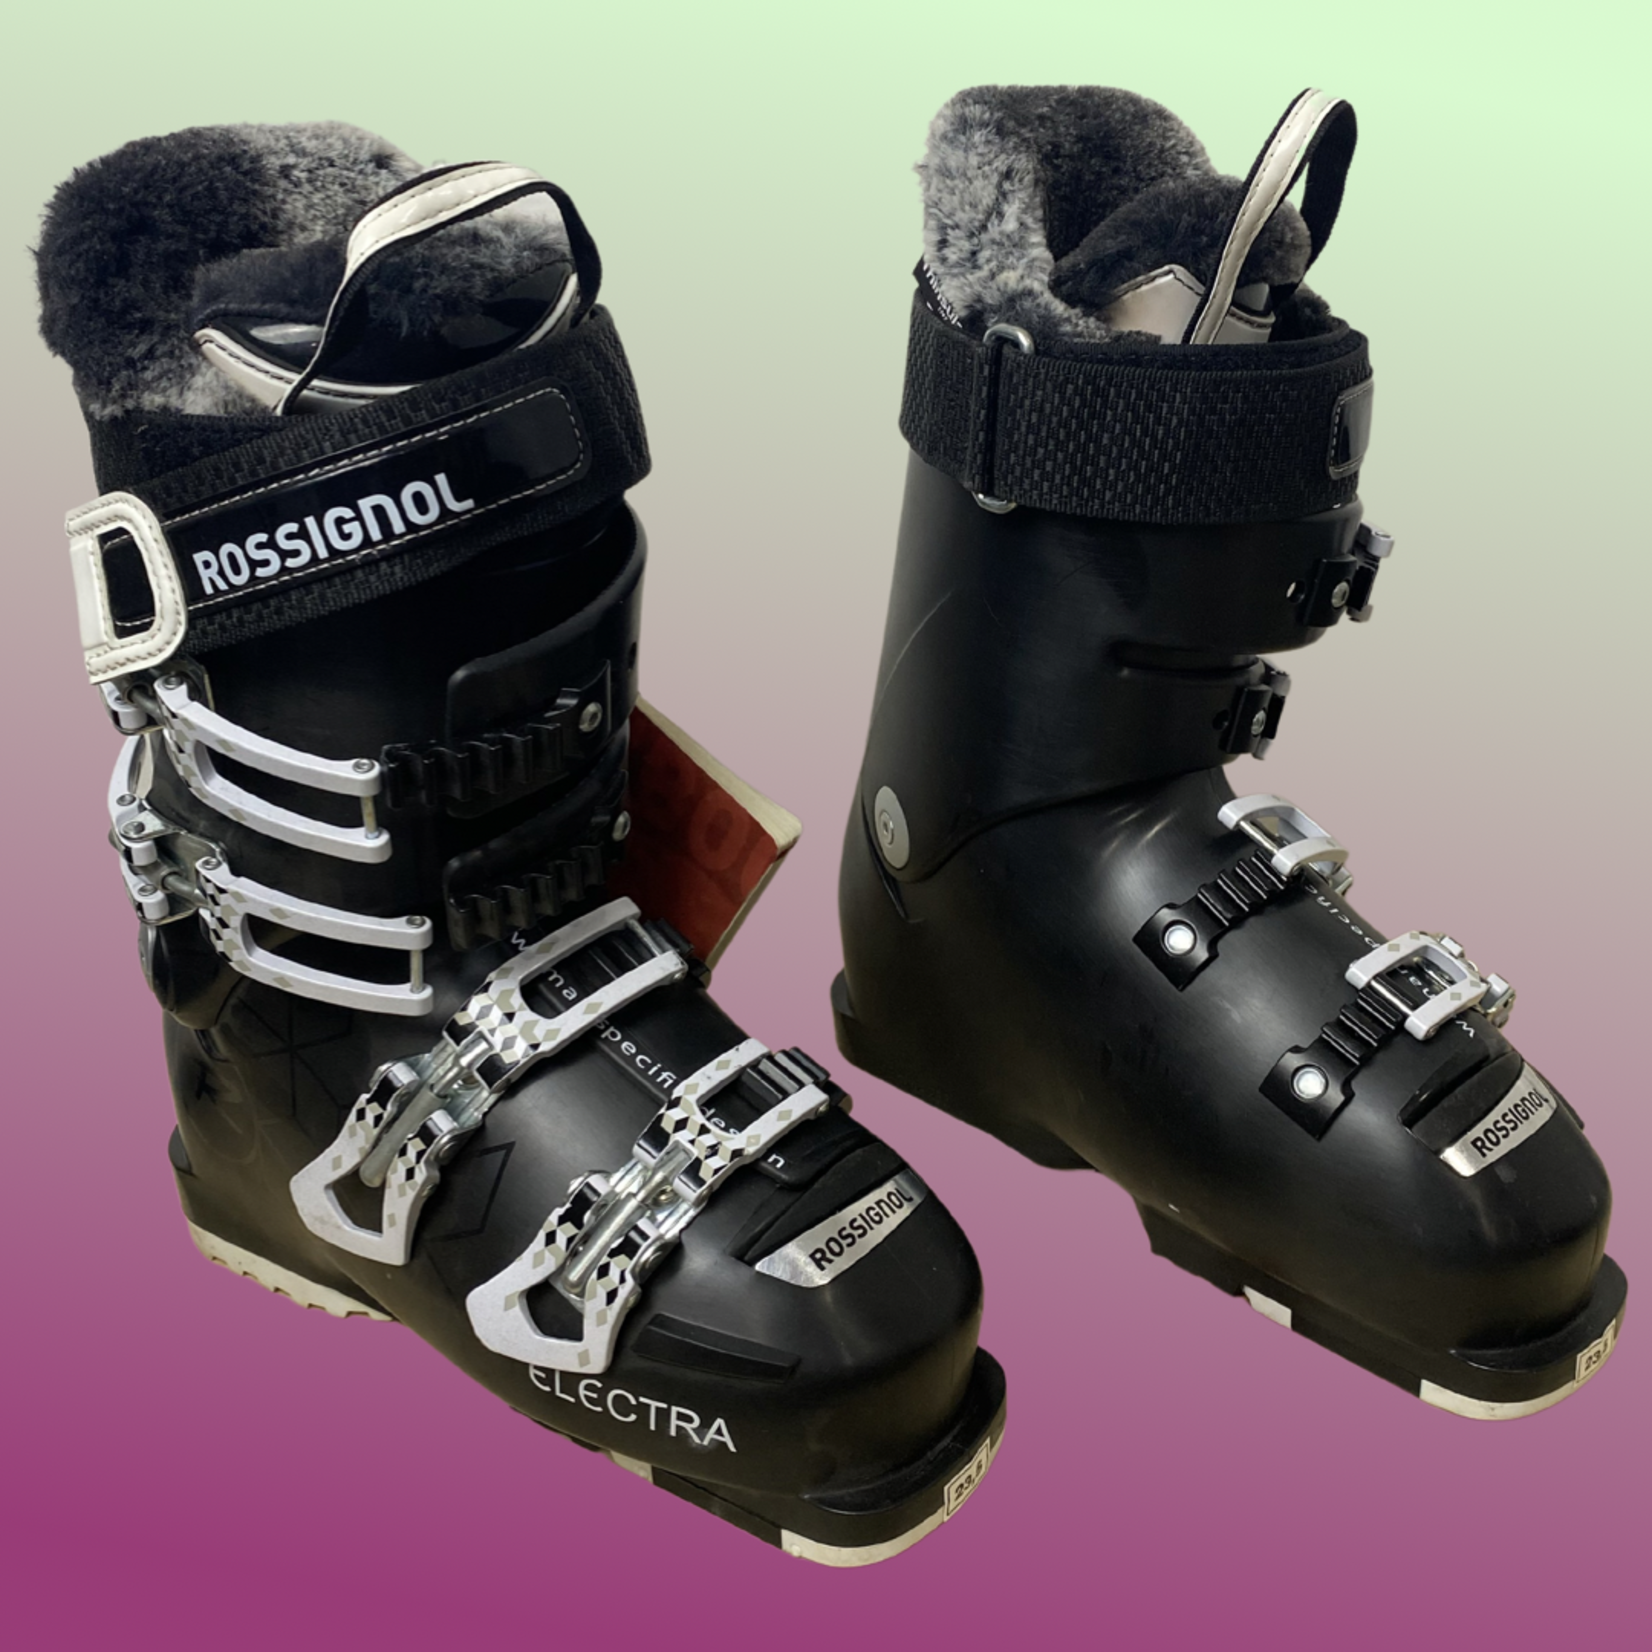 Rossignol NEW Rossignol Electra Women's Ski Boots, Size 23.5